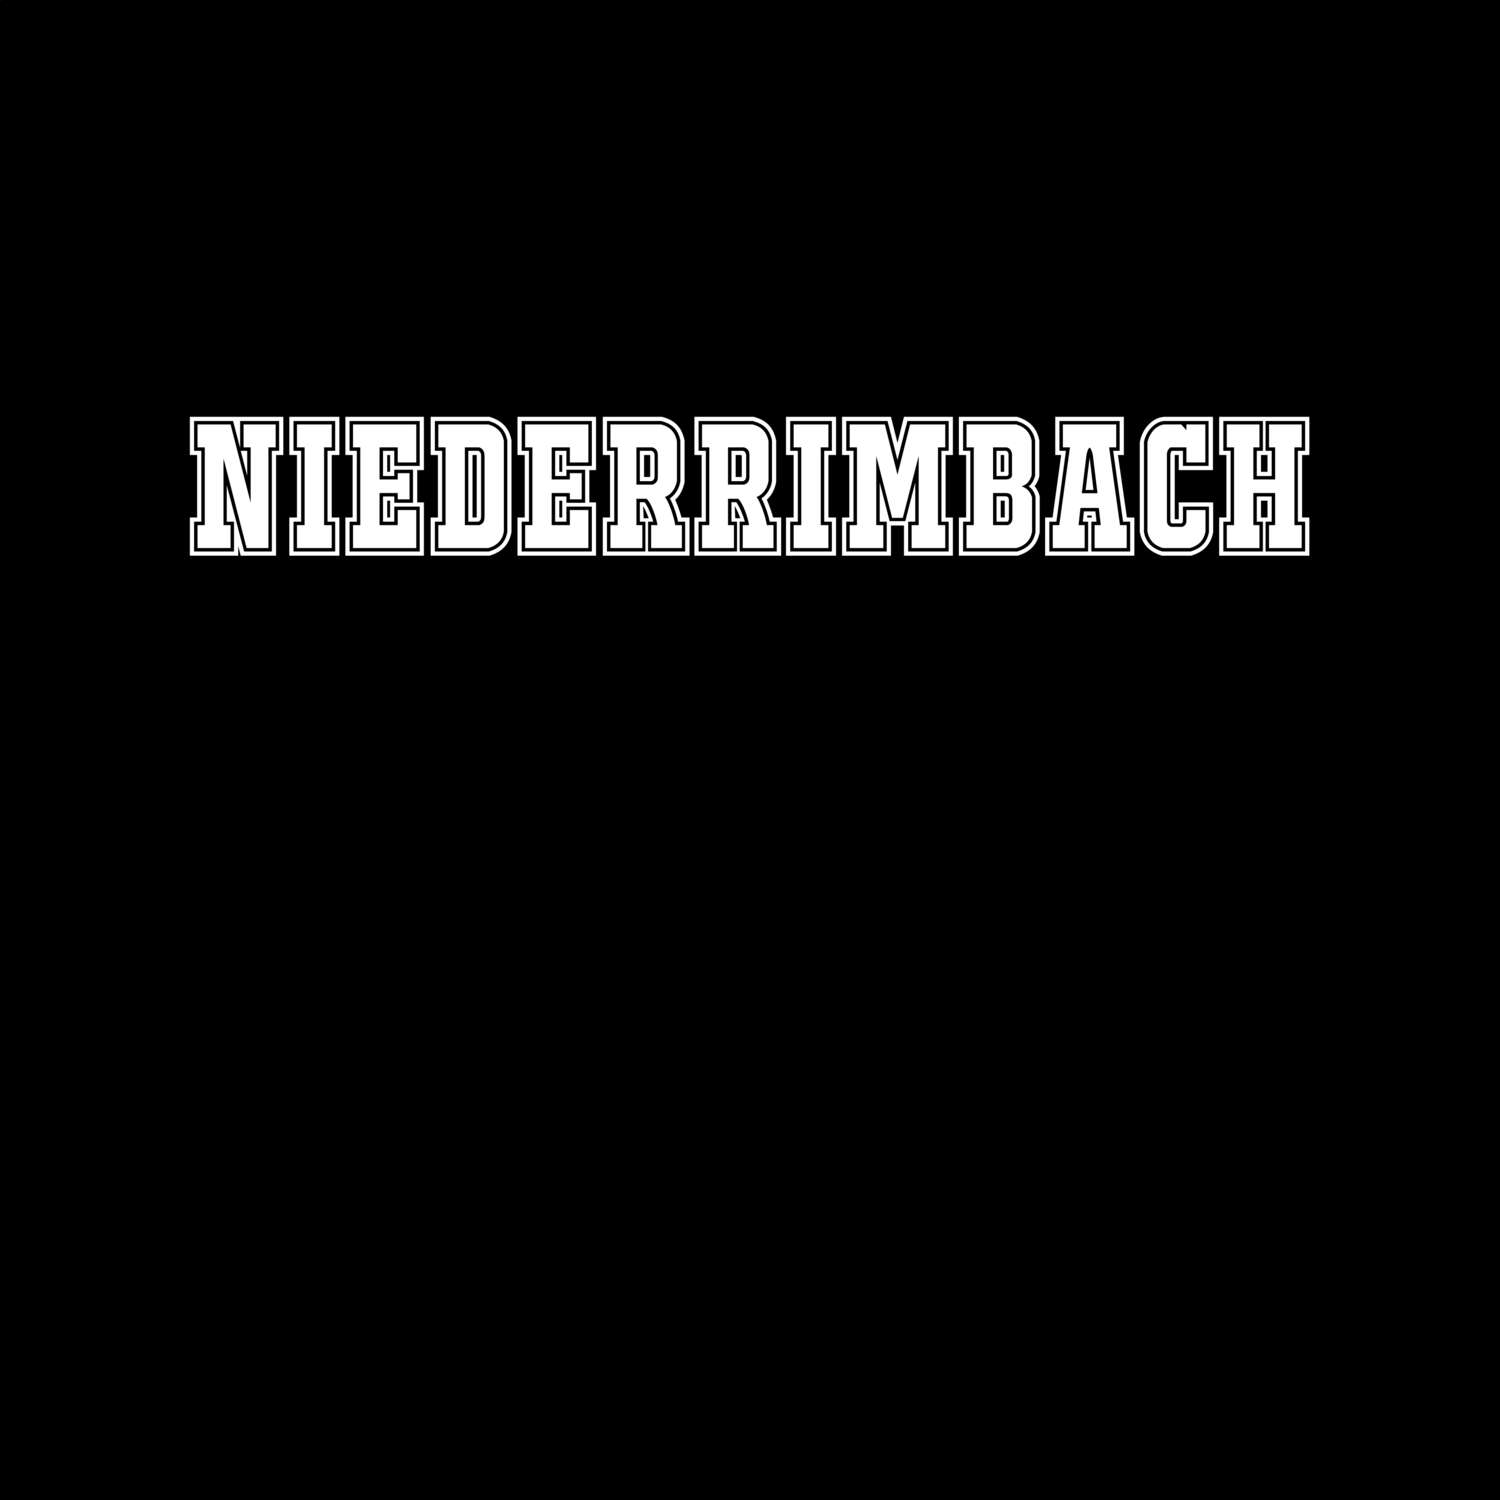 Niederrimbach T-Shirt »Classic«